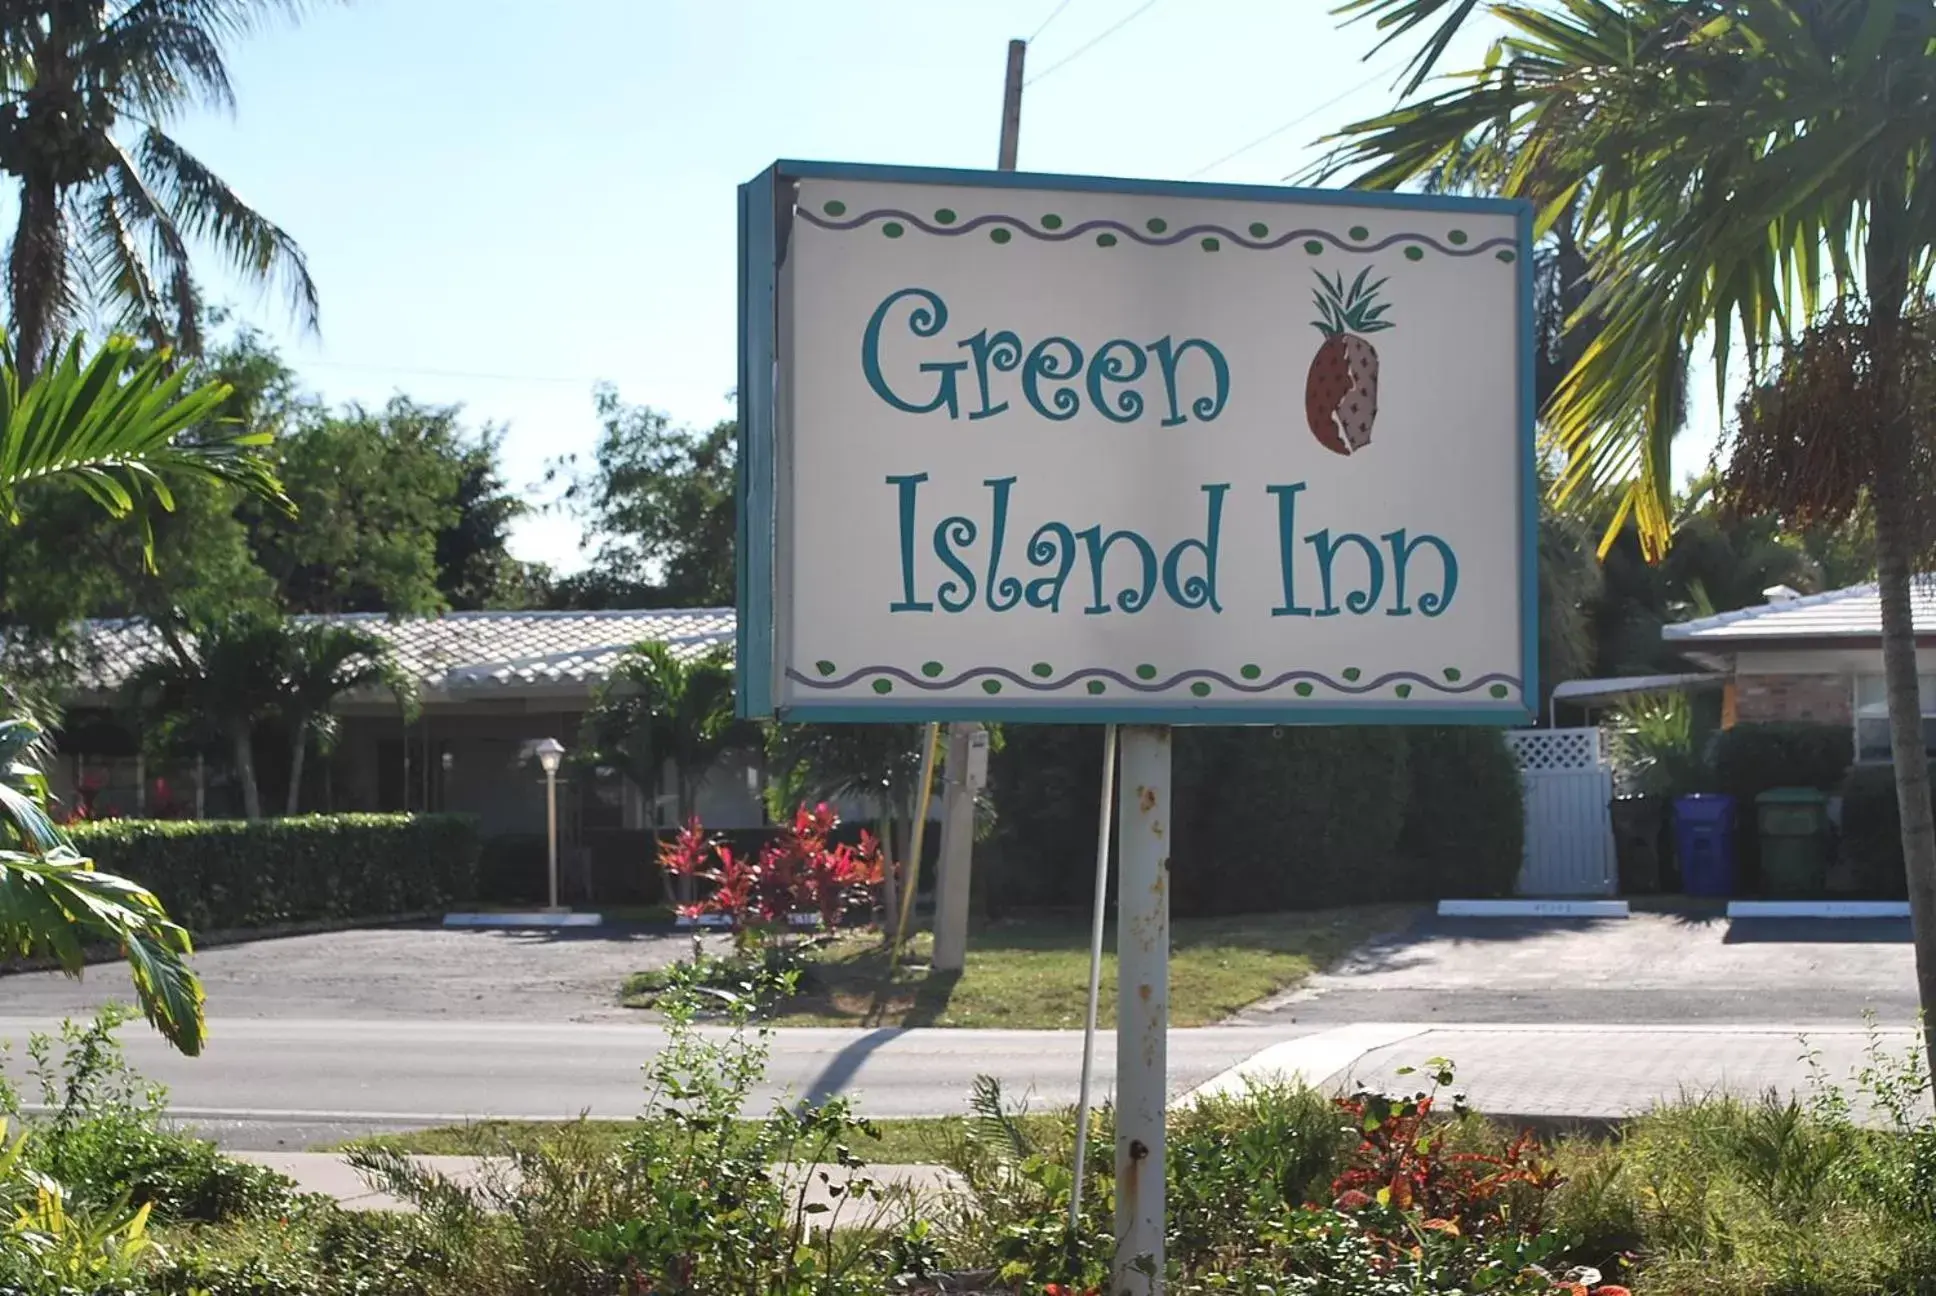 Property logo or sign, Property Logo/Sign in Green Island Inn